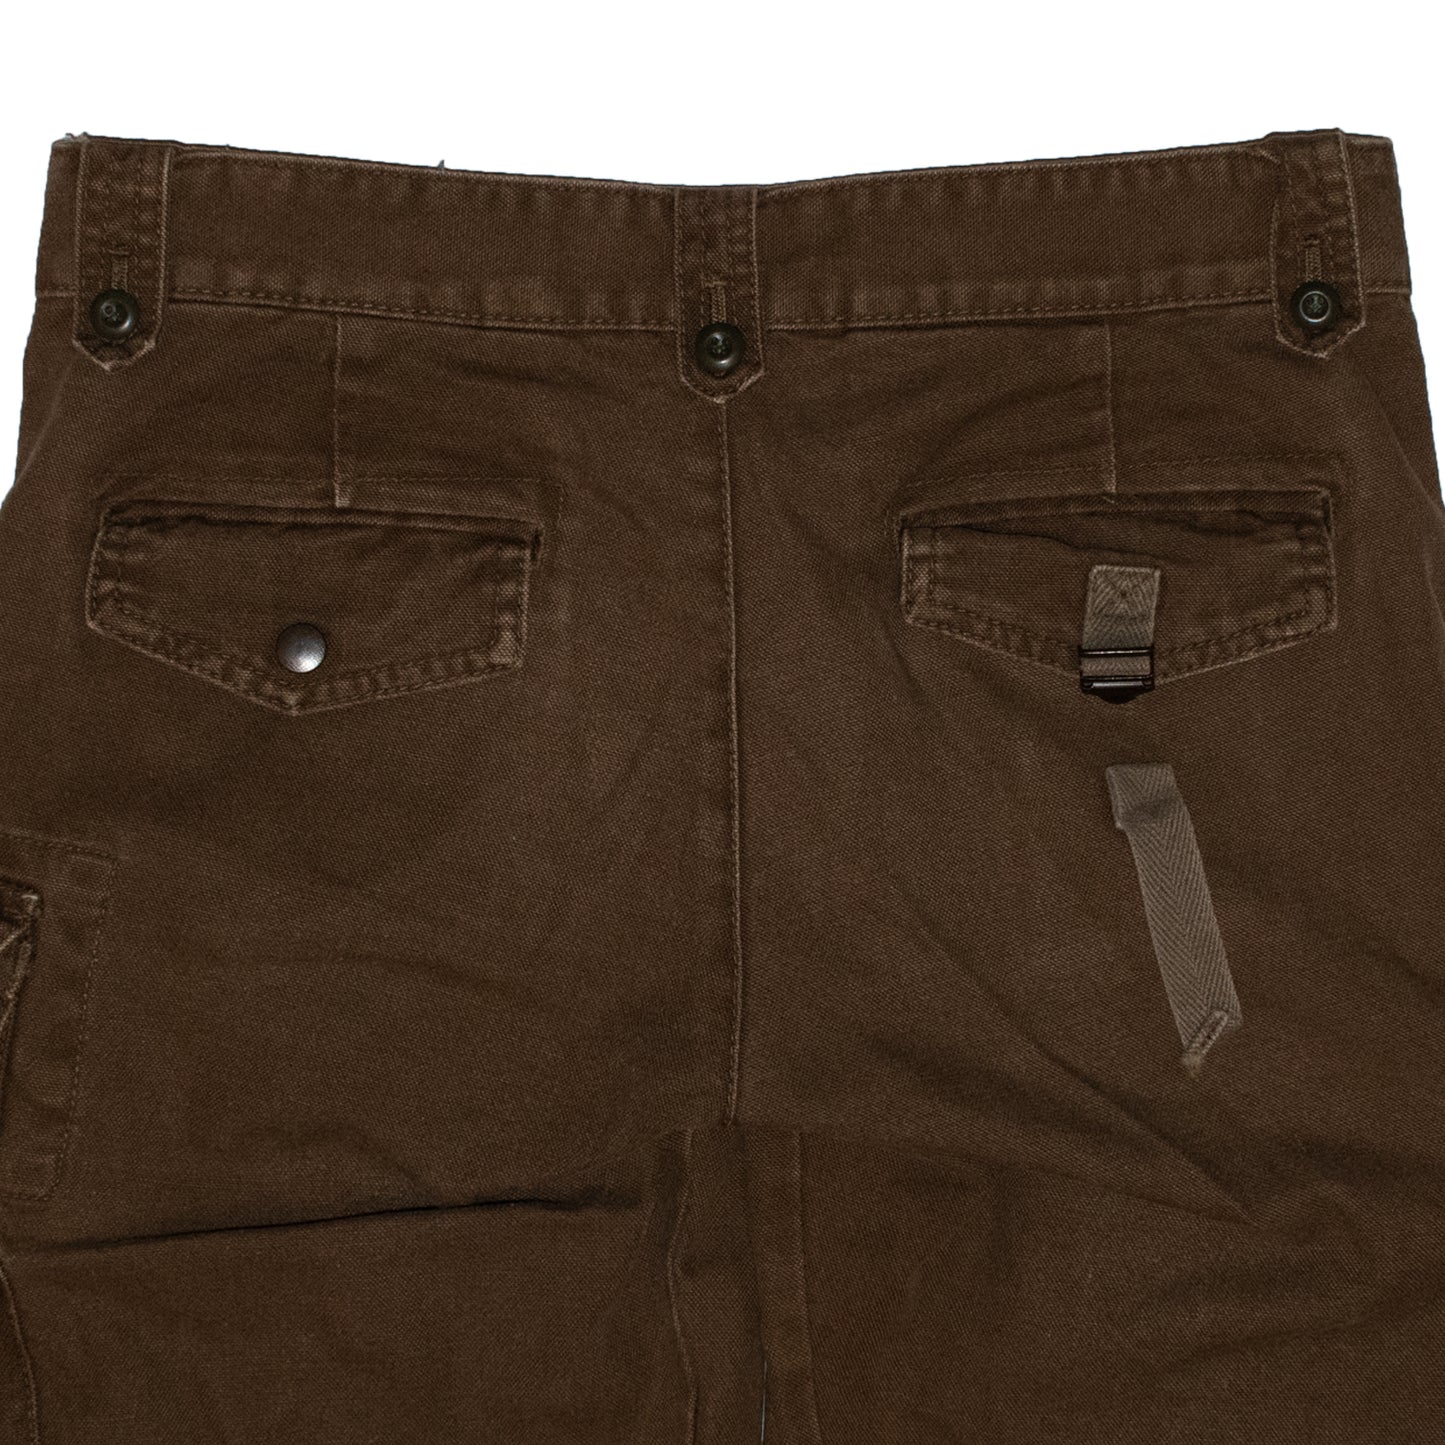 PPFM 12-Pocket Cargo Pants